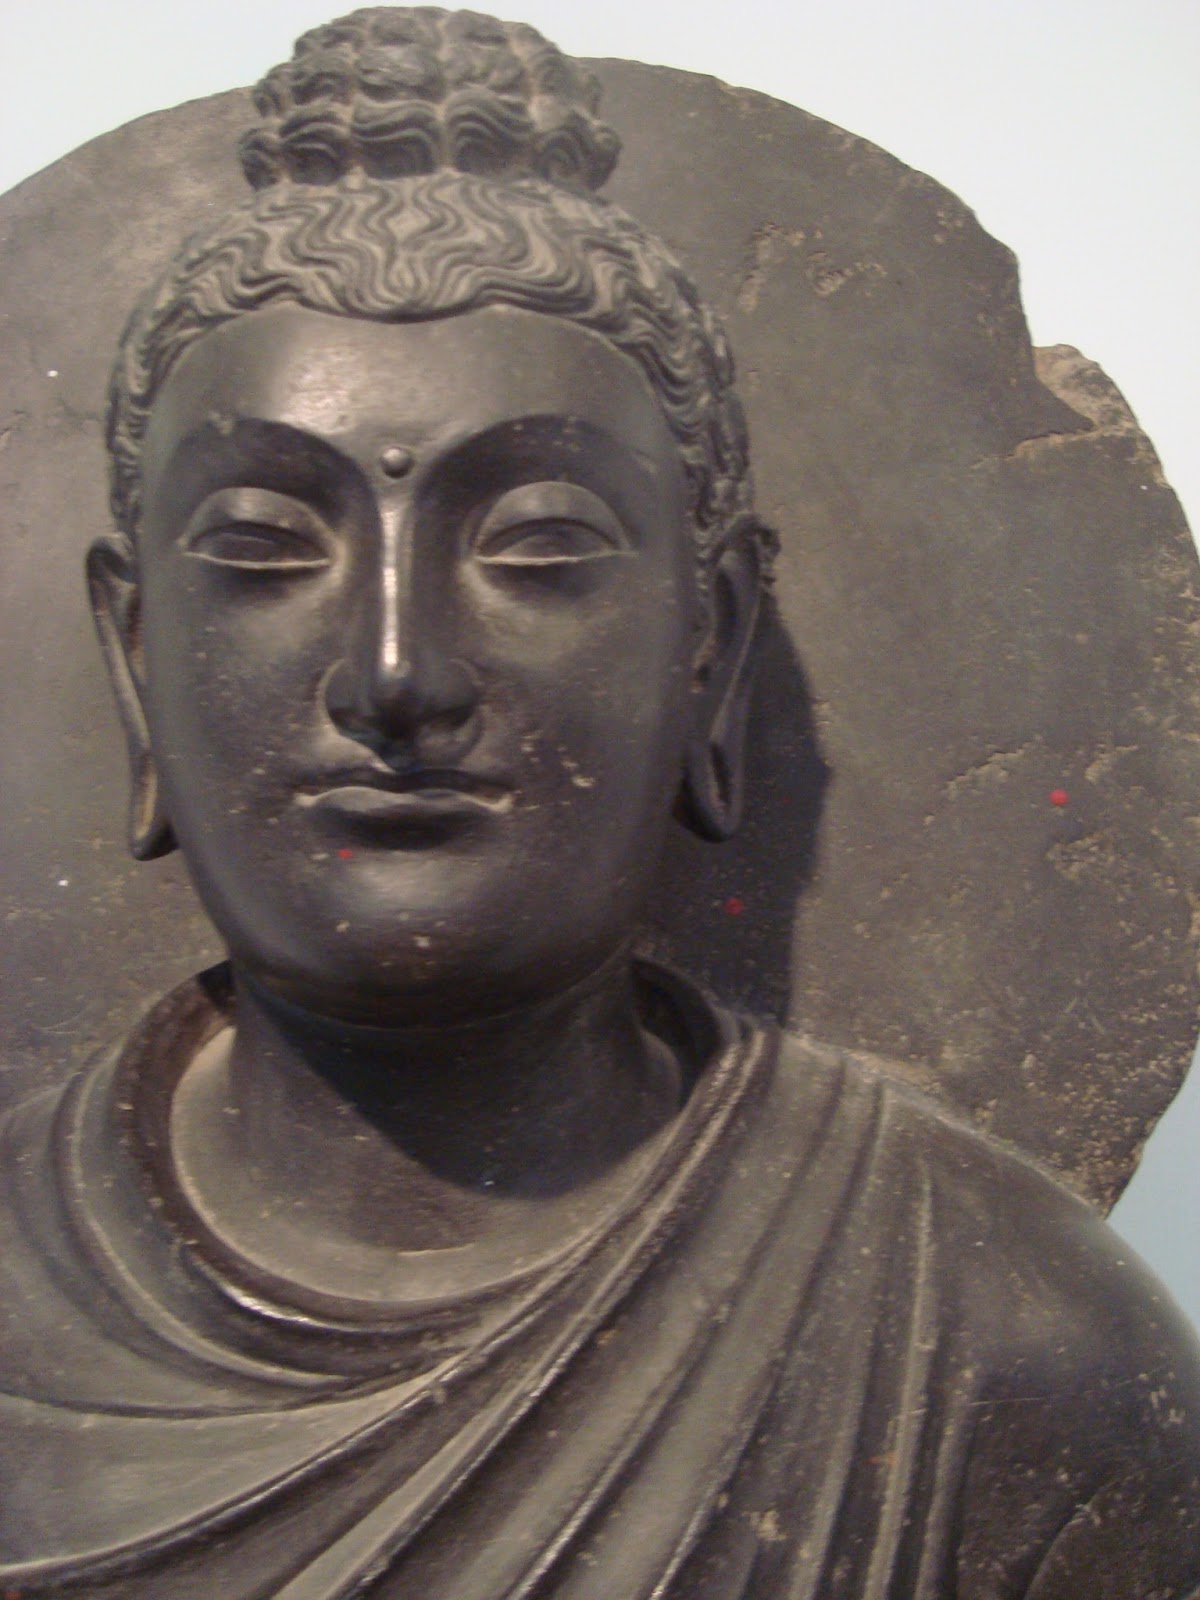 mahabharat star plus hd wallpaper,stone carving,sculpture,statue,head,forehead